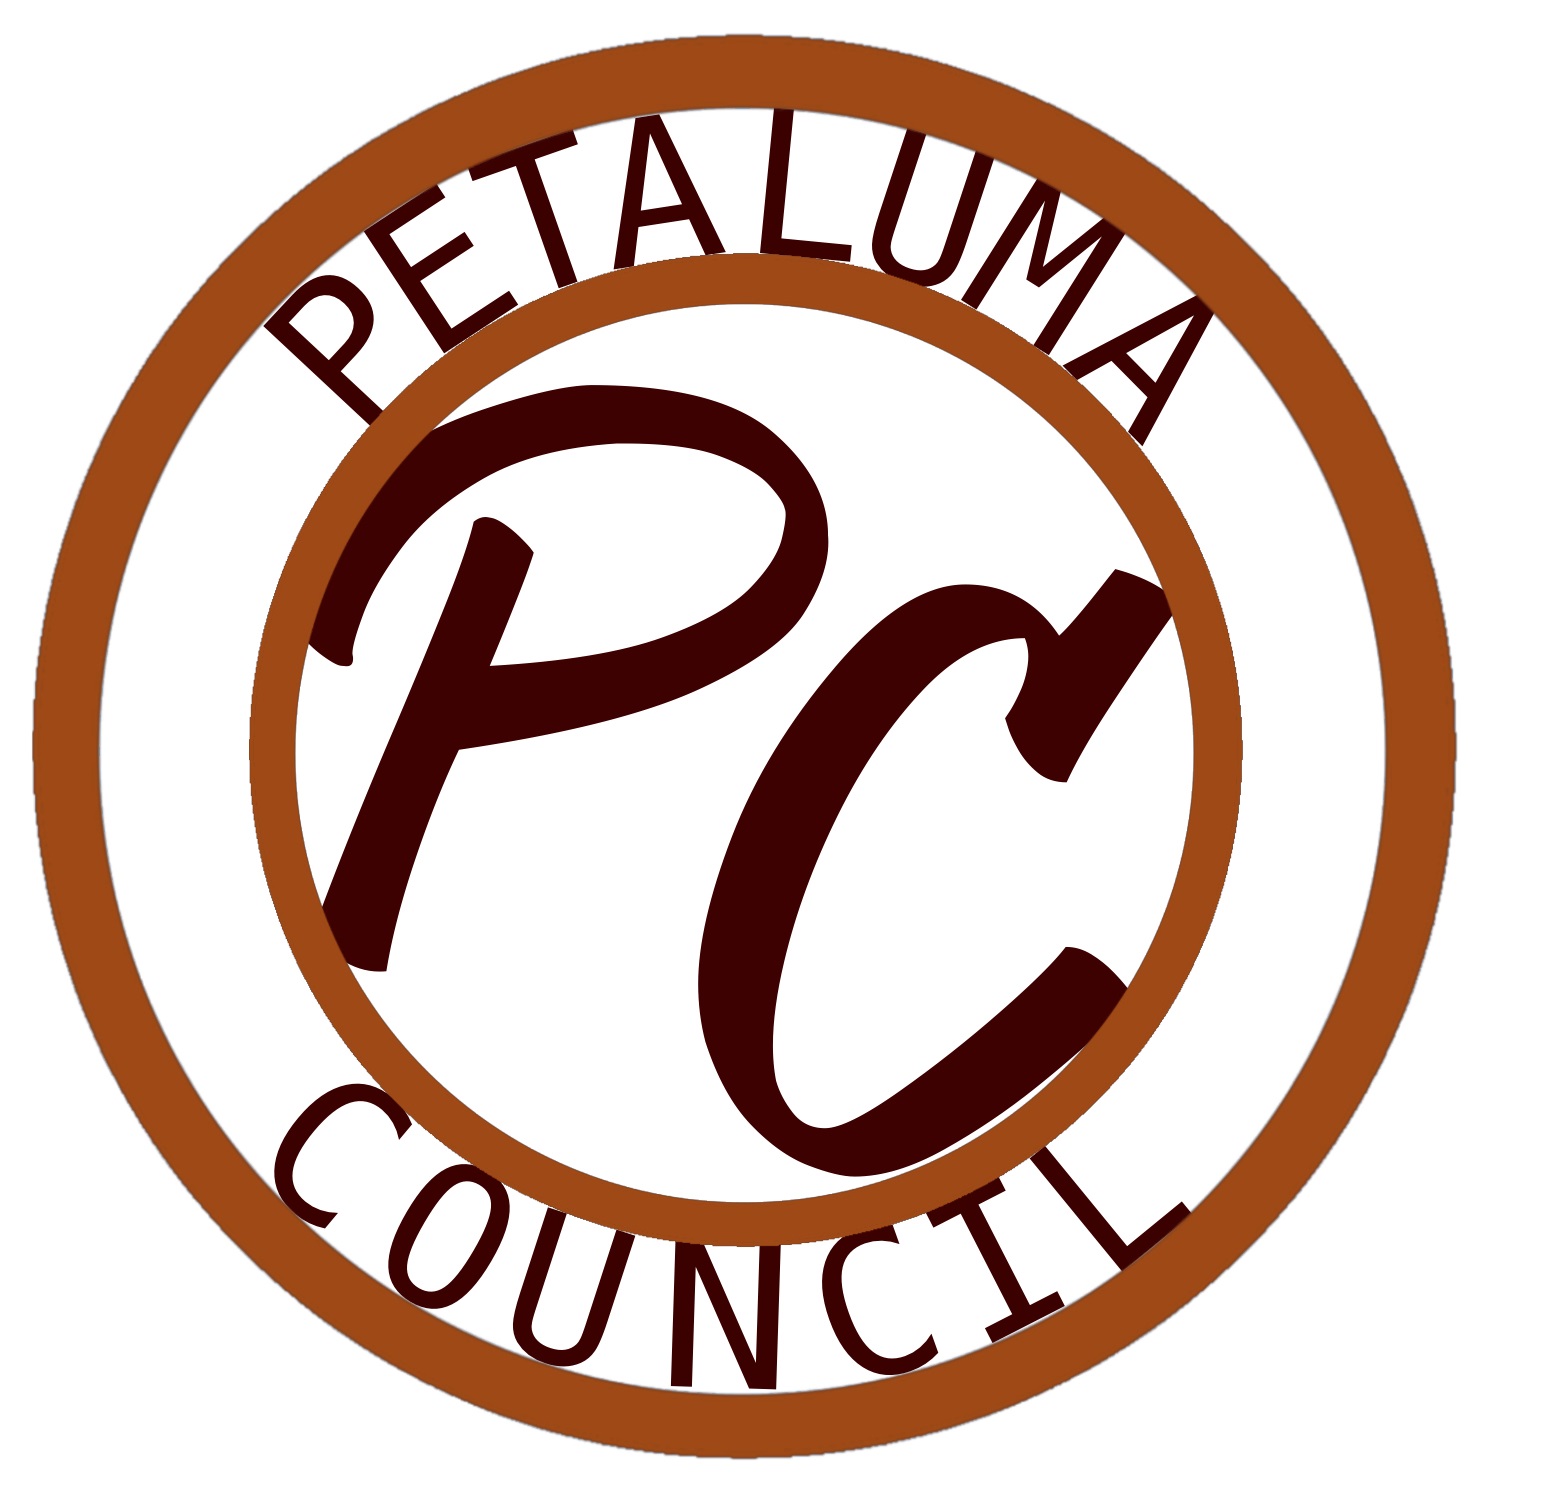 petaluma council logo